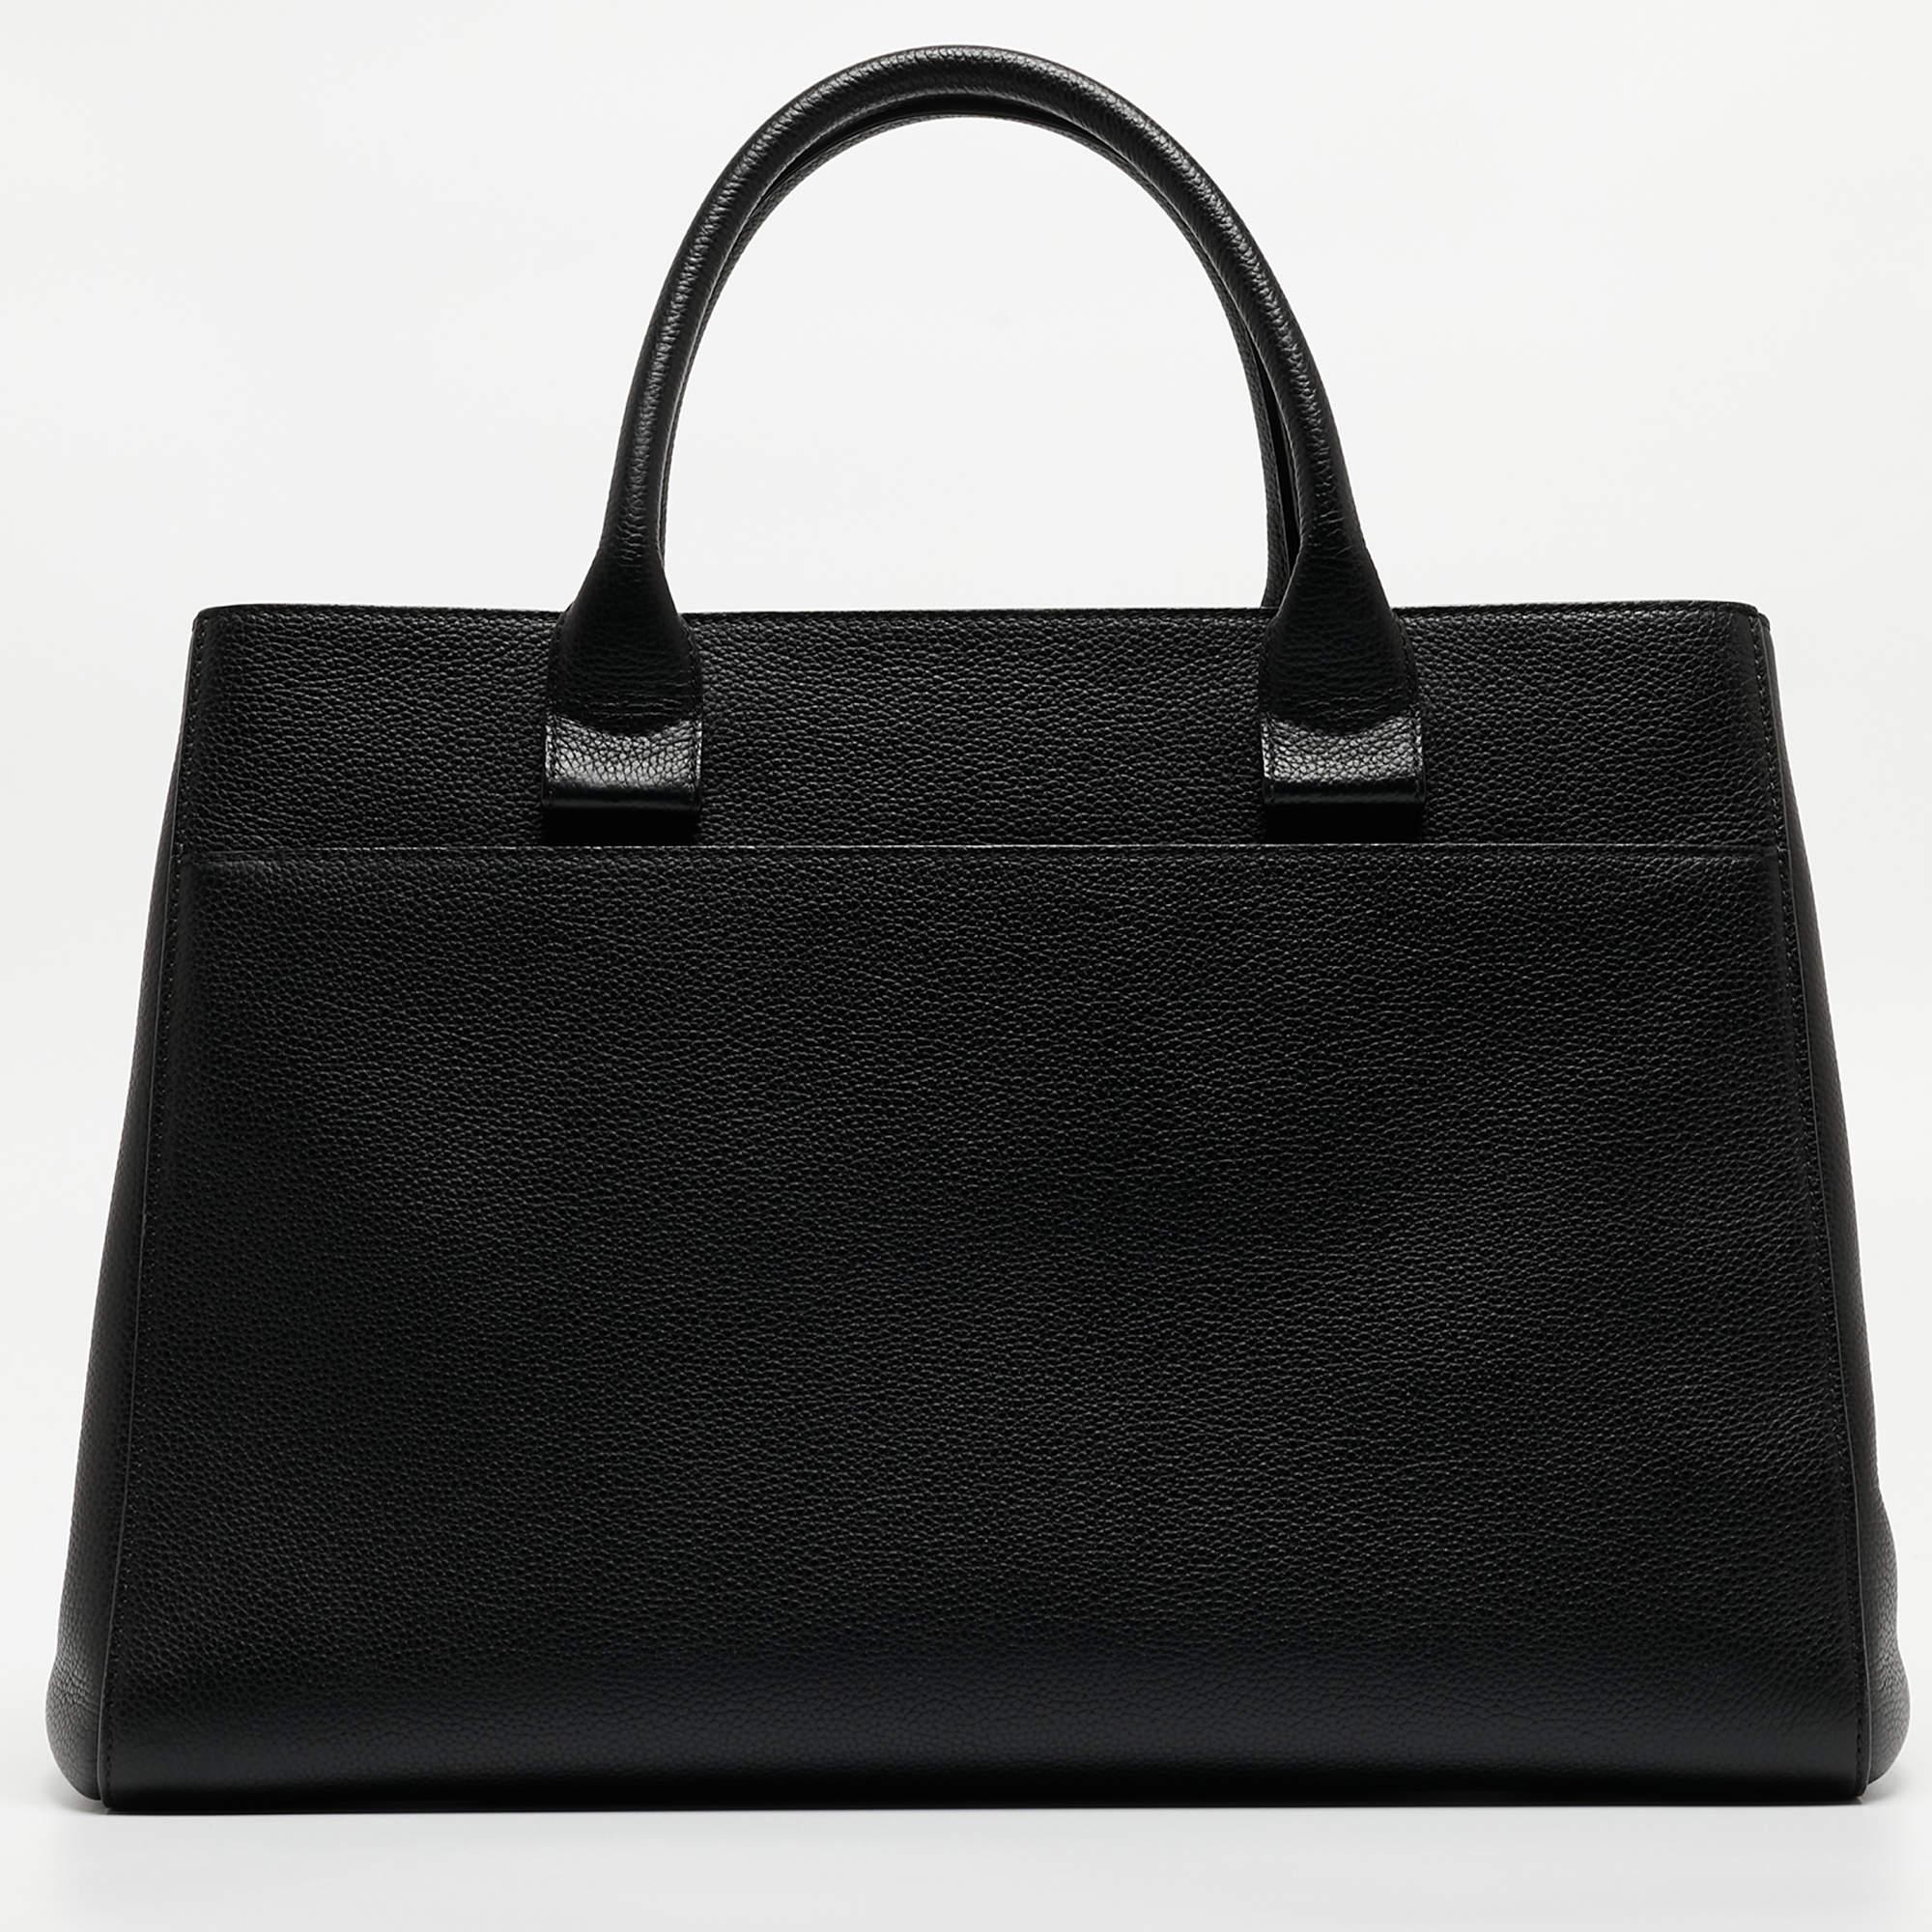 Chanel Black Leather Medium Neo Executive Shopping Tote 3